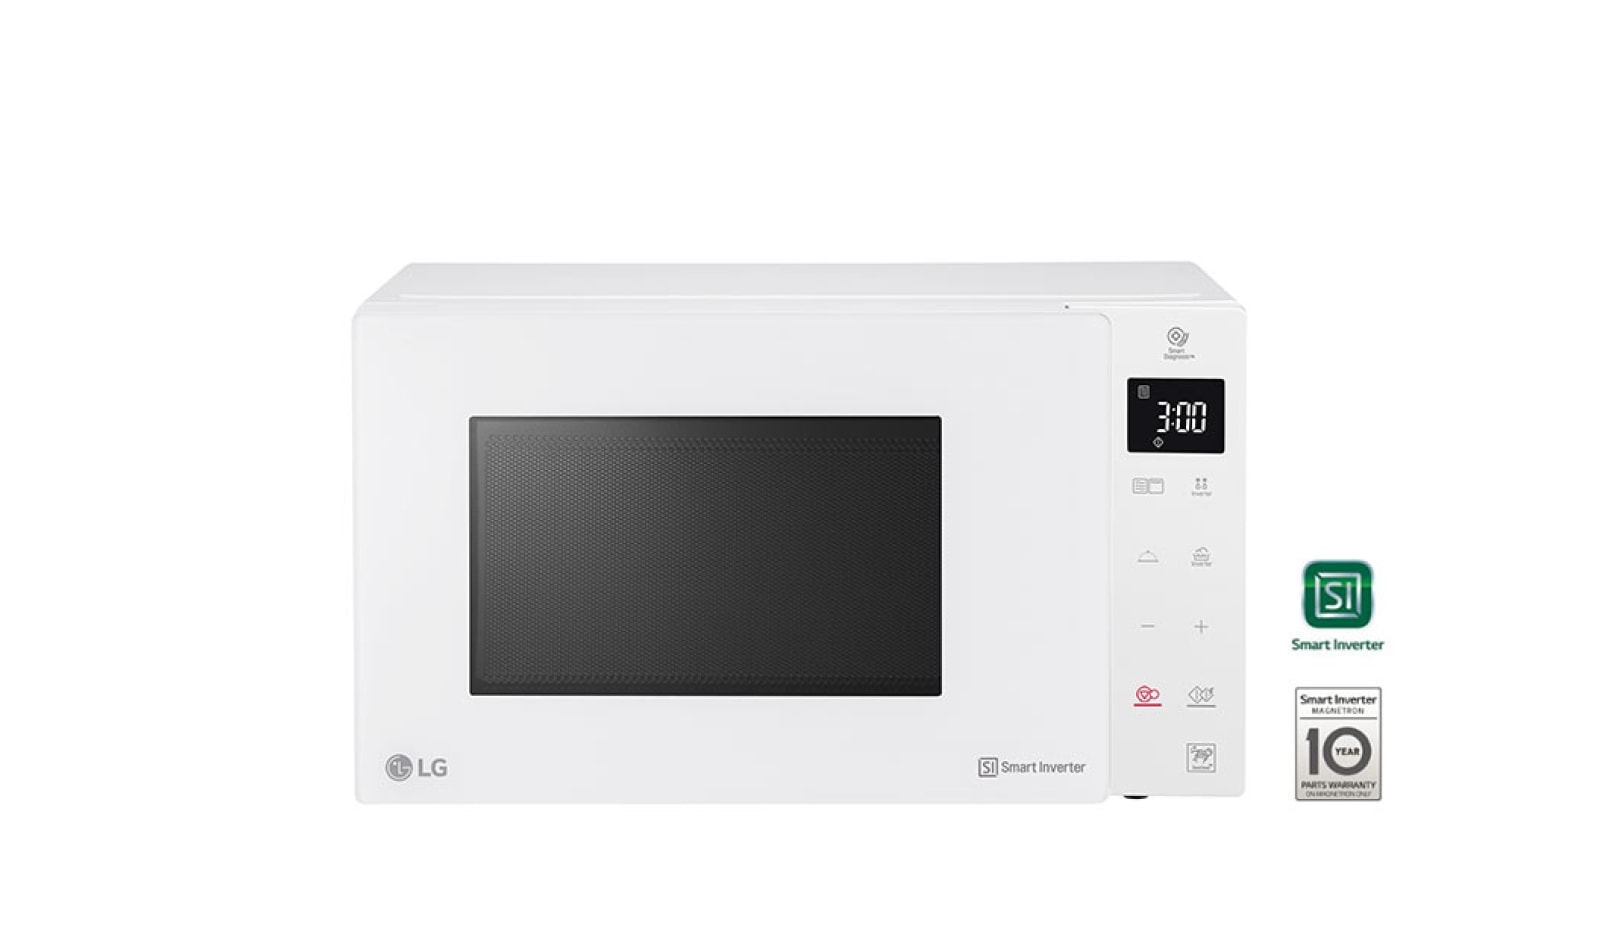 LG Micro-ondas com grill LG NeoChef™ MH6535GDH, 25 litros, 1000 W, Smart Inverter, EasyClean™, branco, MH6535GDH